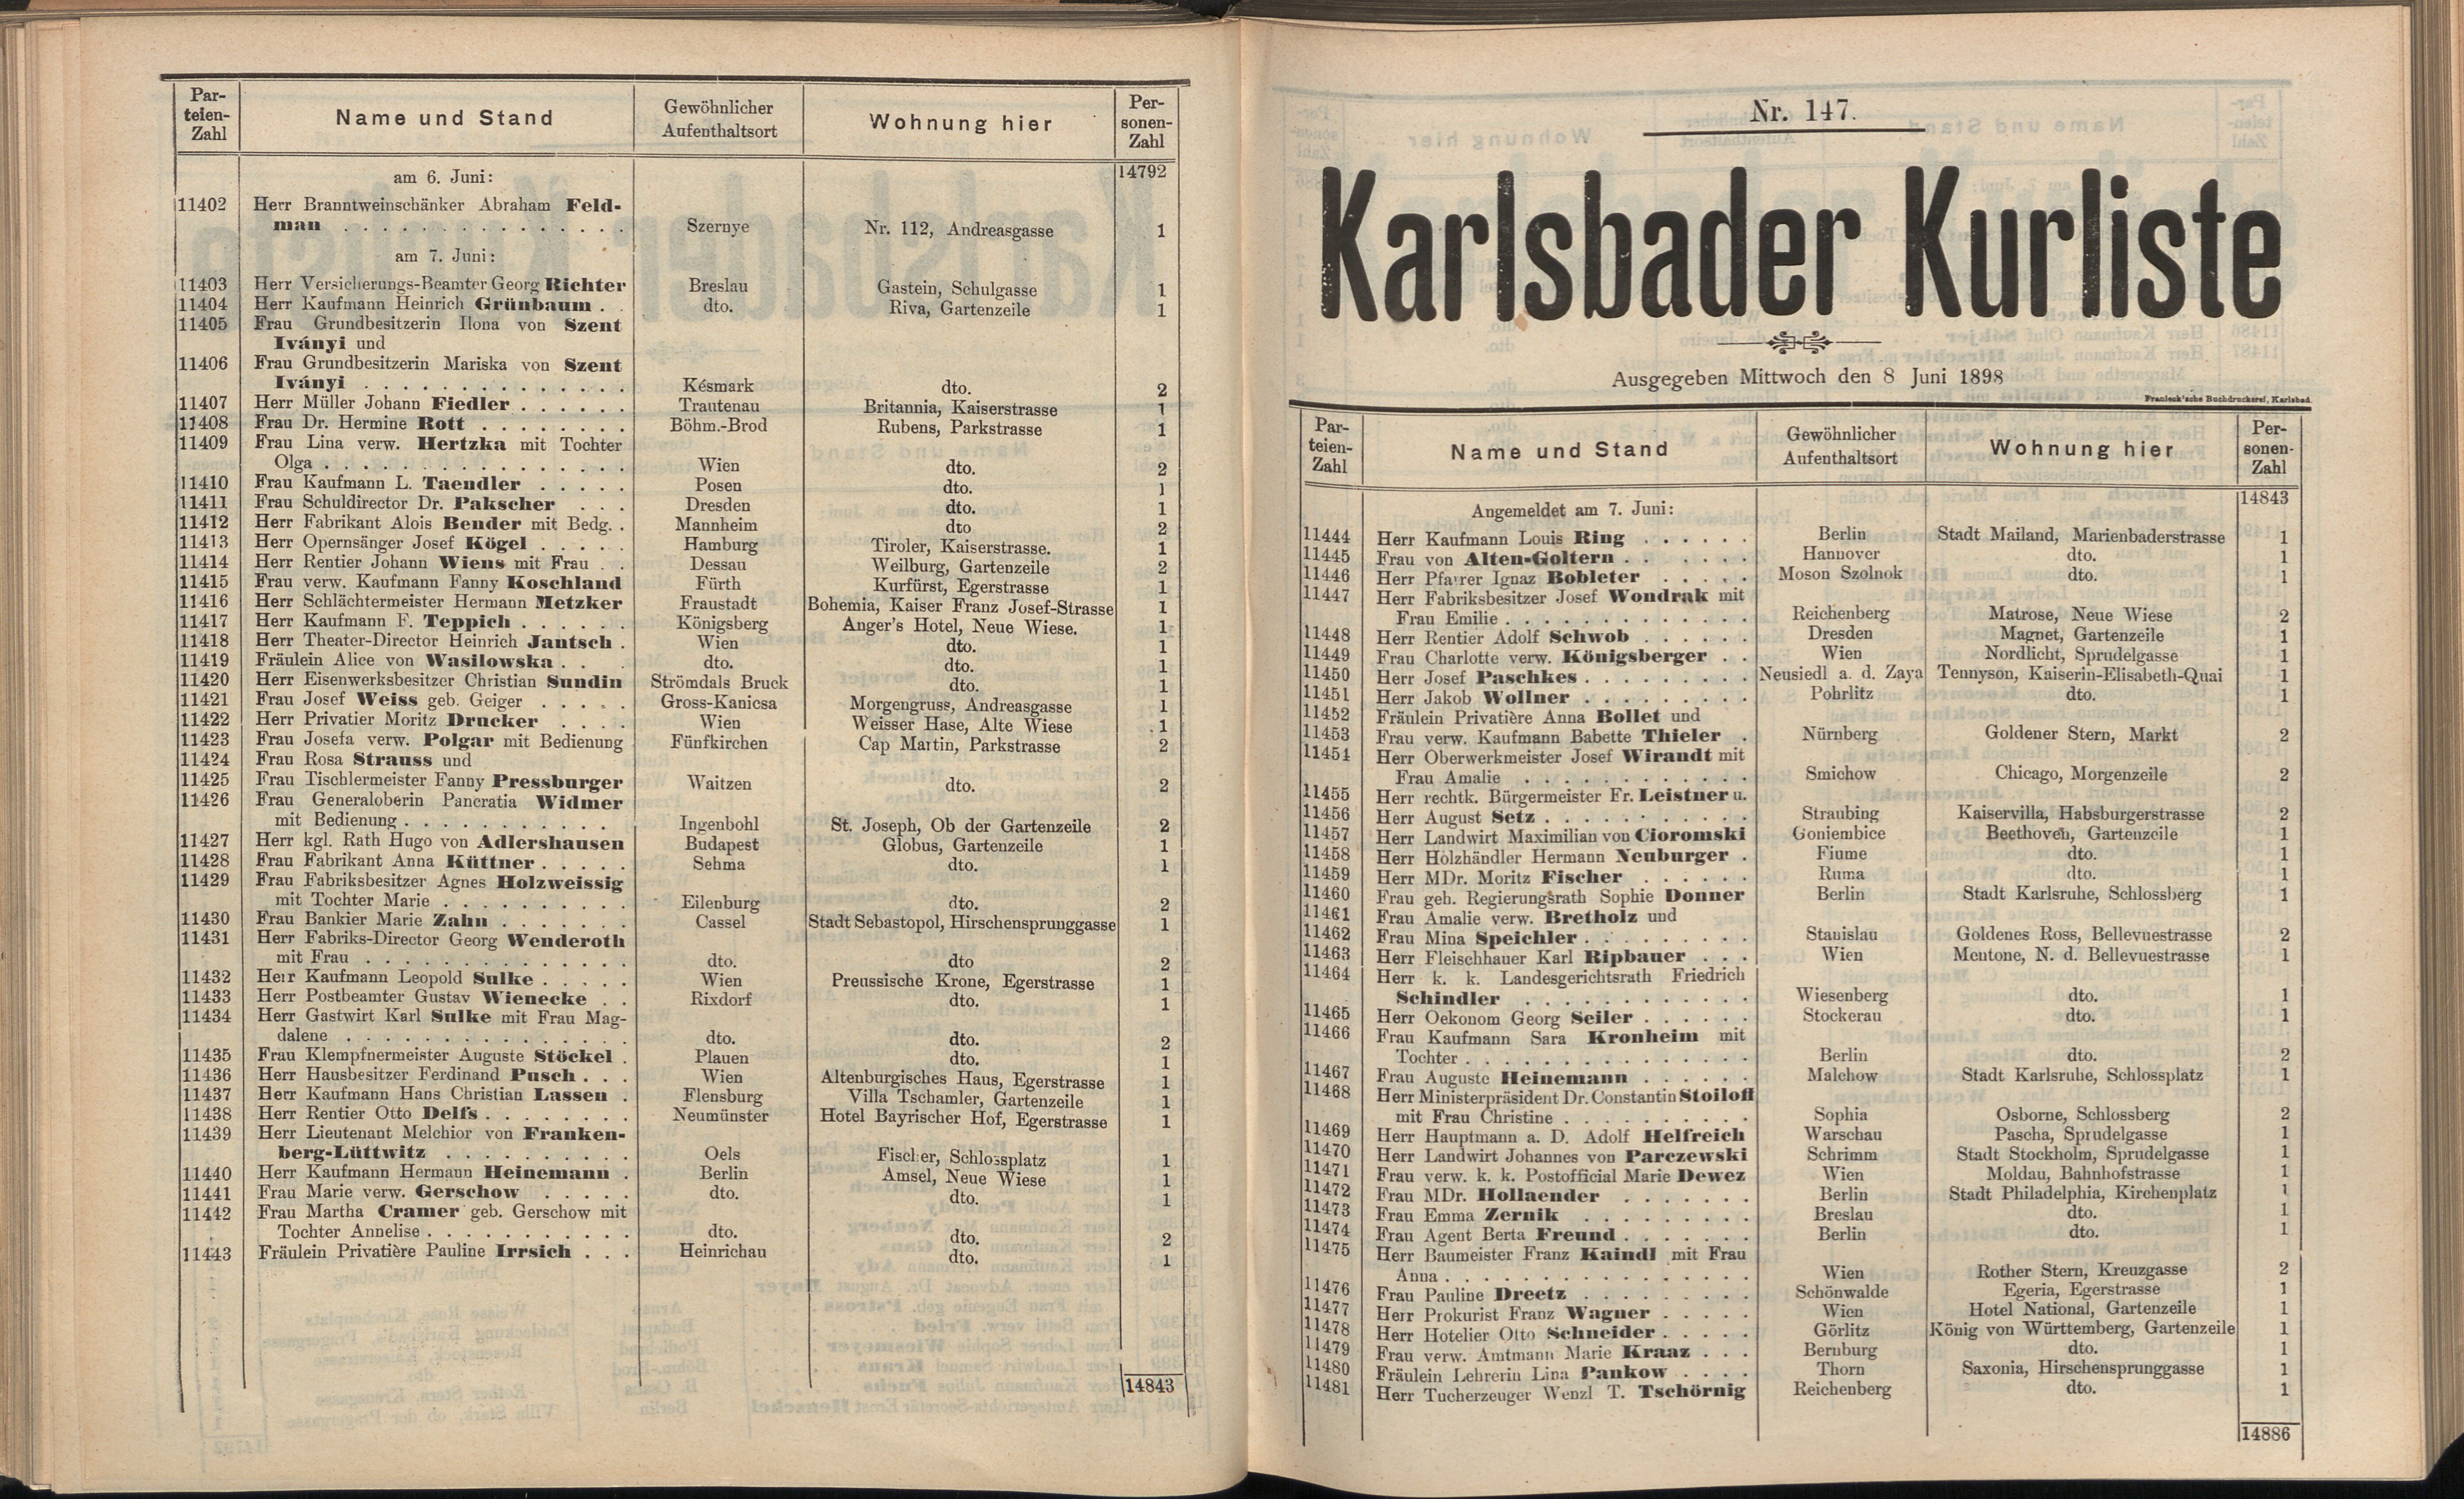 163. soap-kv_knihovna_karlsbader-kurliste-1898_1640